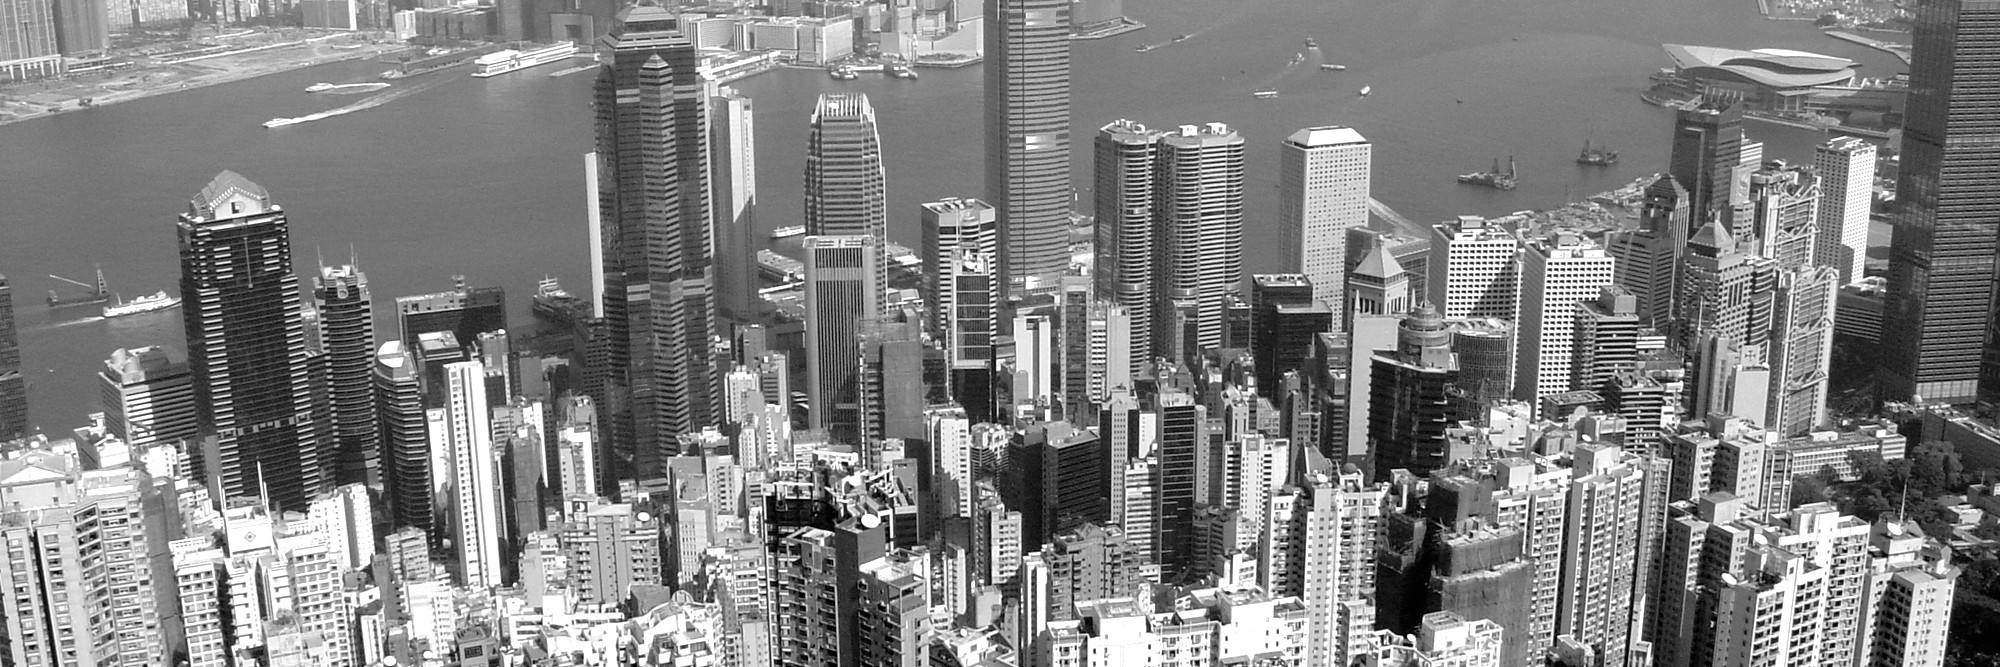 Mainland-Hong Kong Bond Market Connect to be Established